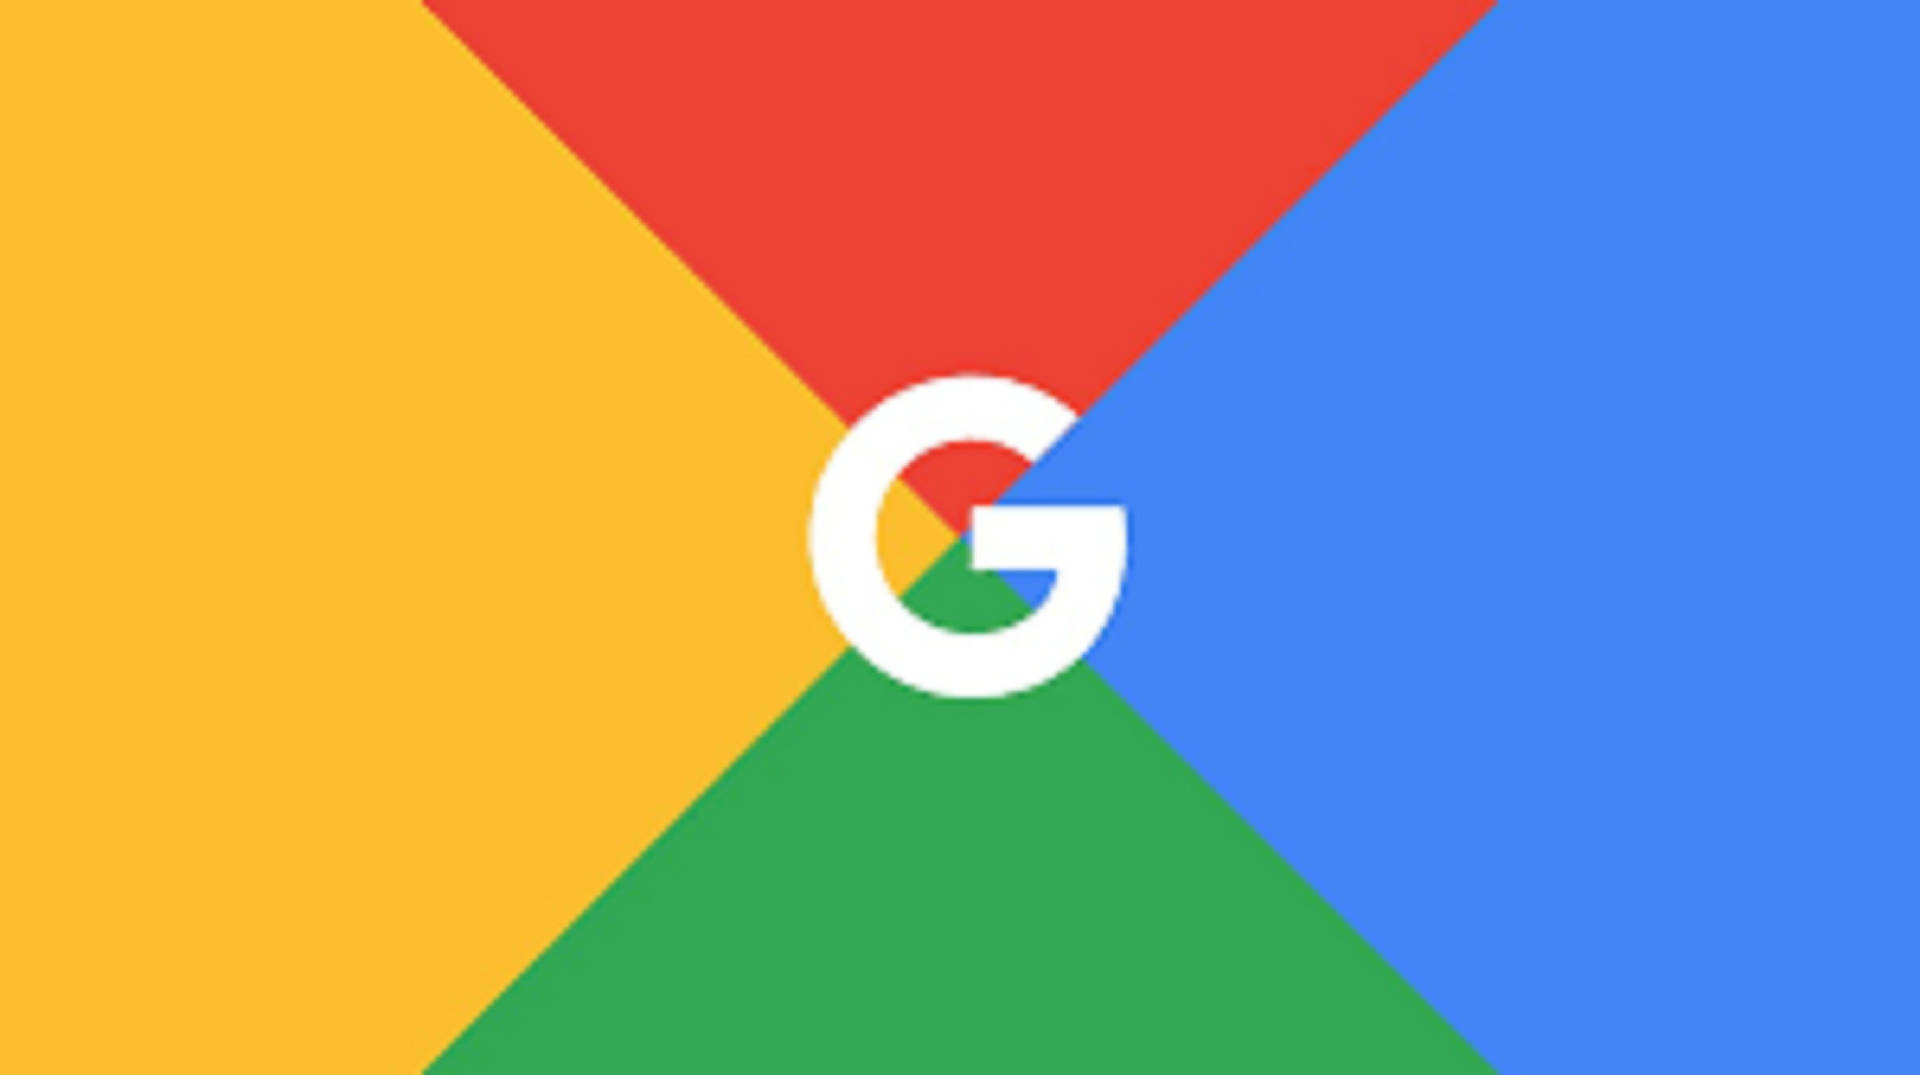 Google Logo And Color Branding